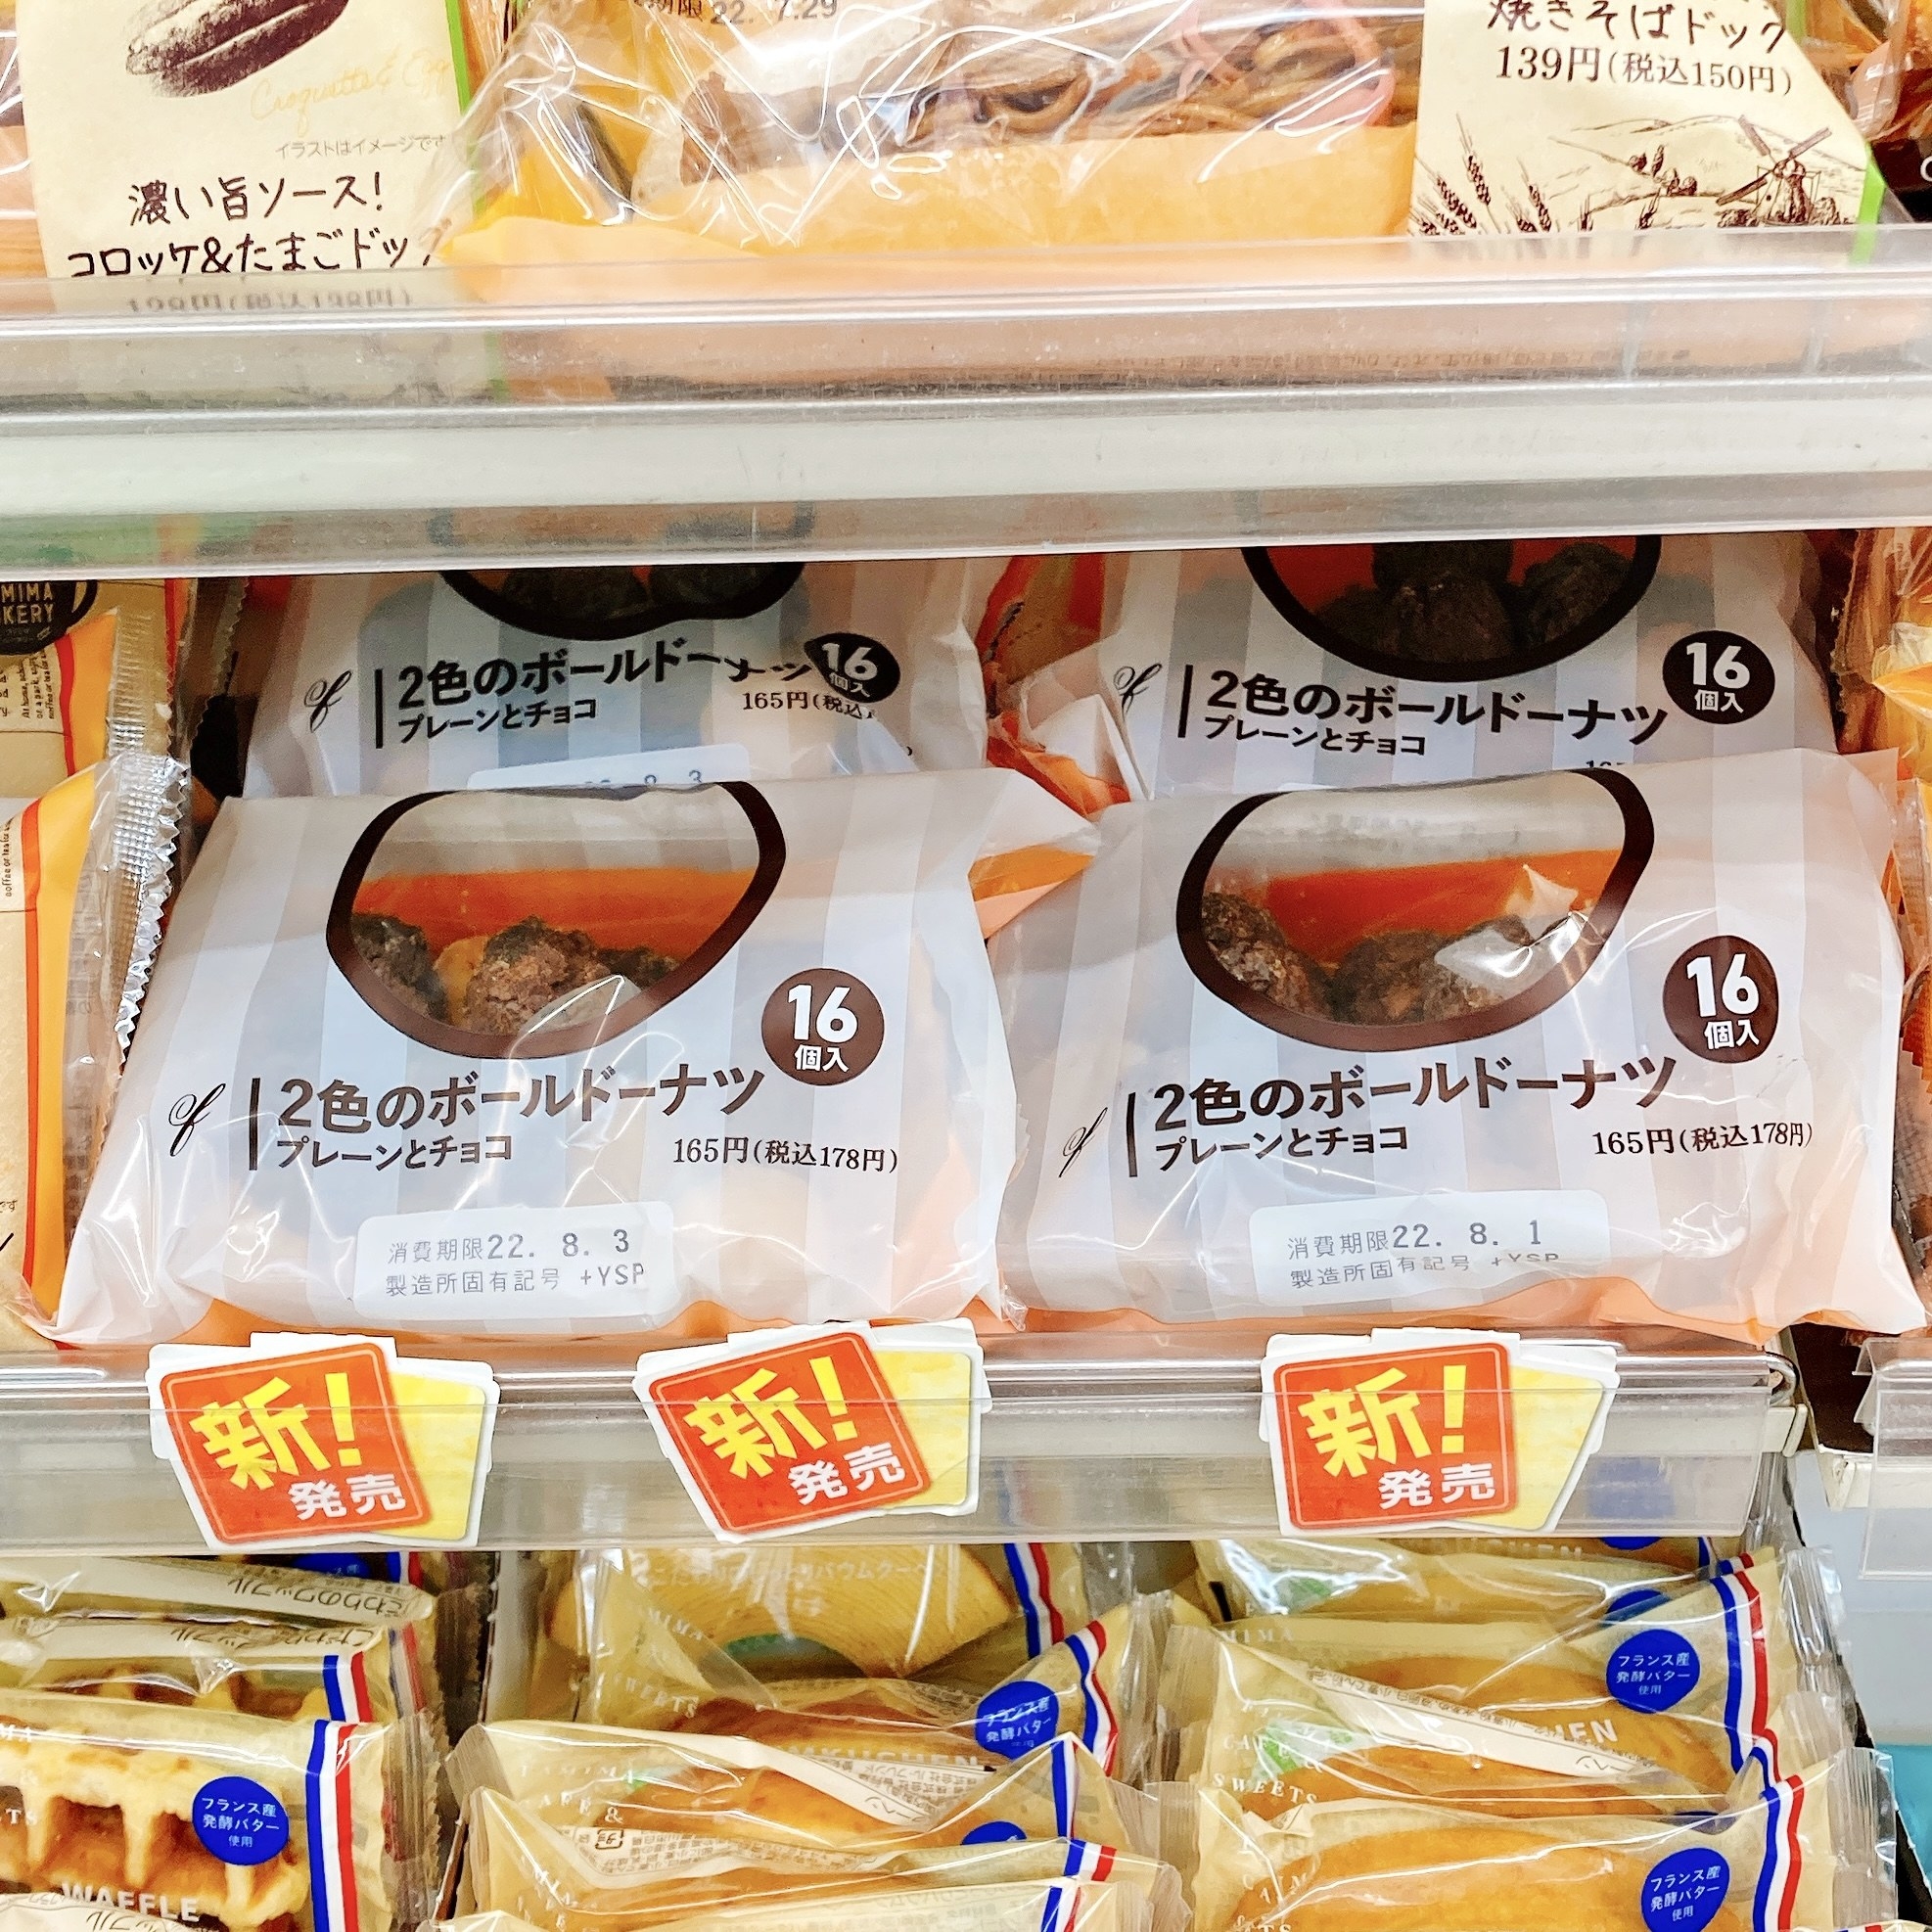 FamilyMart（ファミリーマート）でオススメの菓子パン「2色のボールドーナツプレーンとチョコ」